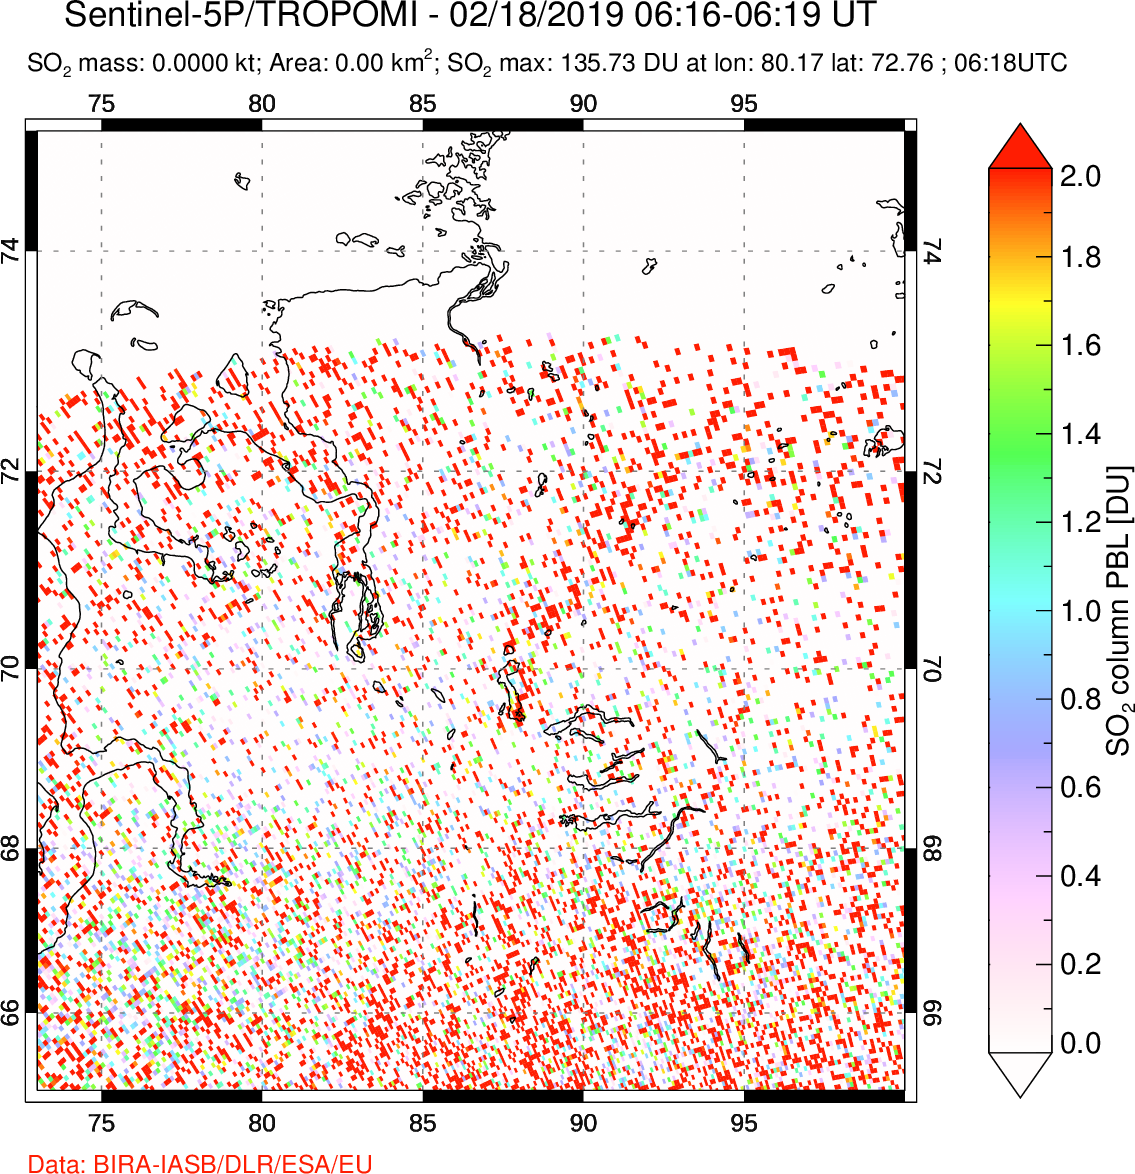 A sulfur dioxide image over Norilsk, Russian Federation on Feb 18, 2019.